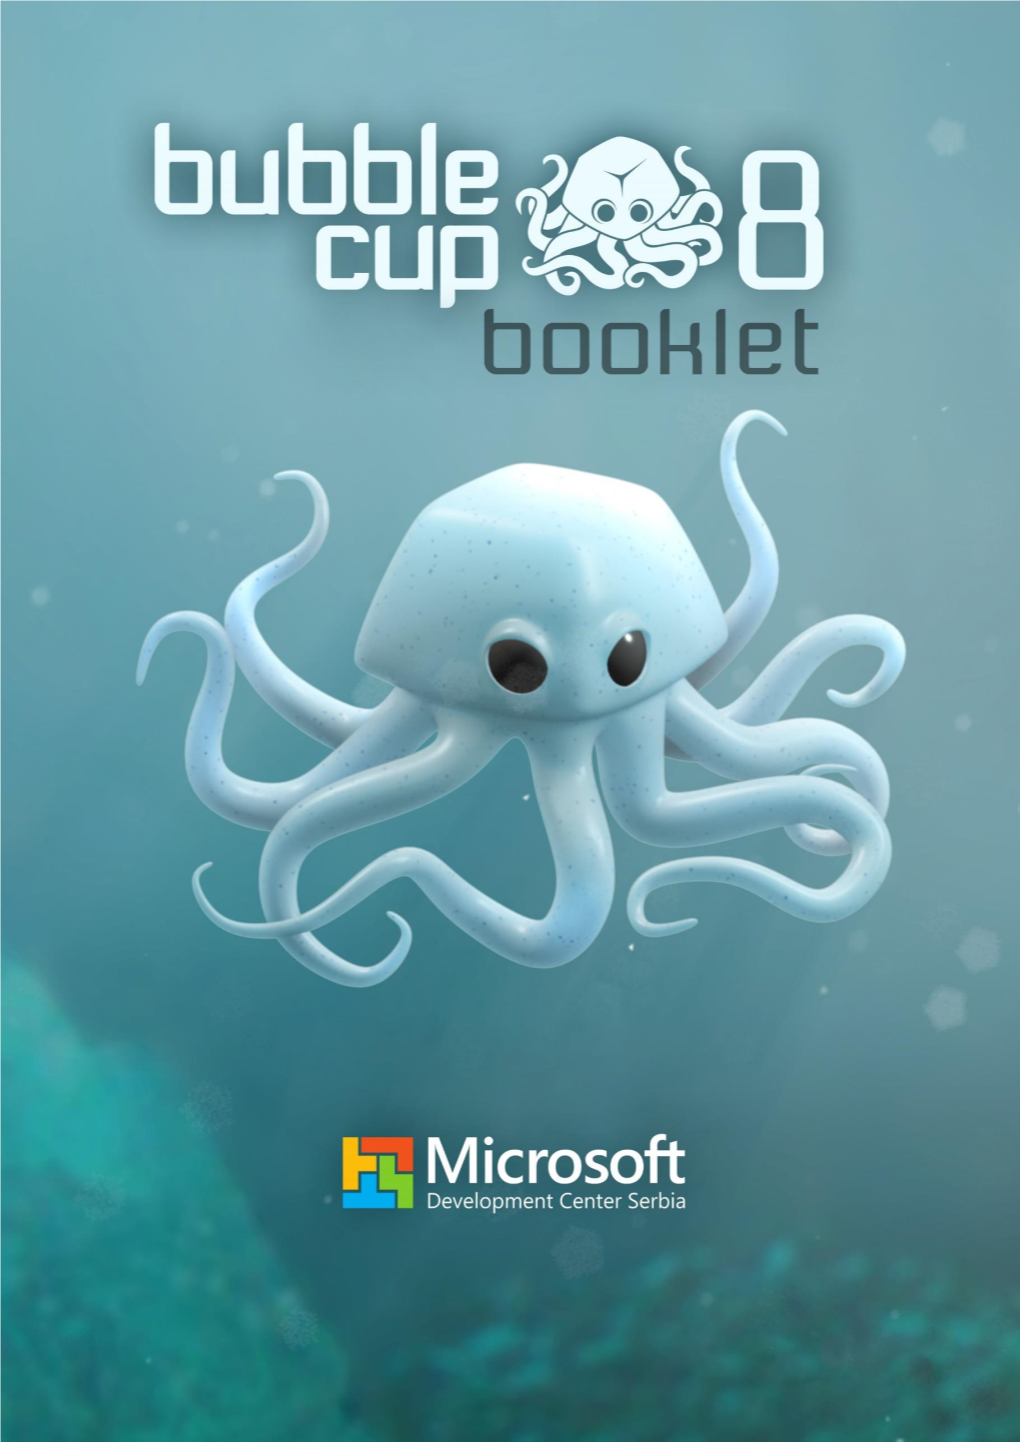 BUBBLE CUP 2015 Student Programming Contest Microsoft Development Center Serbia